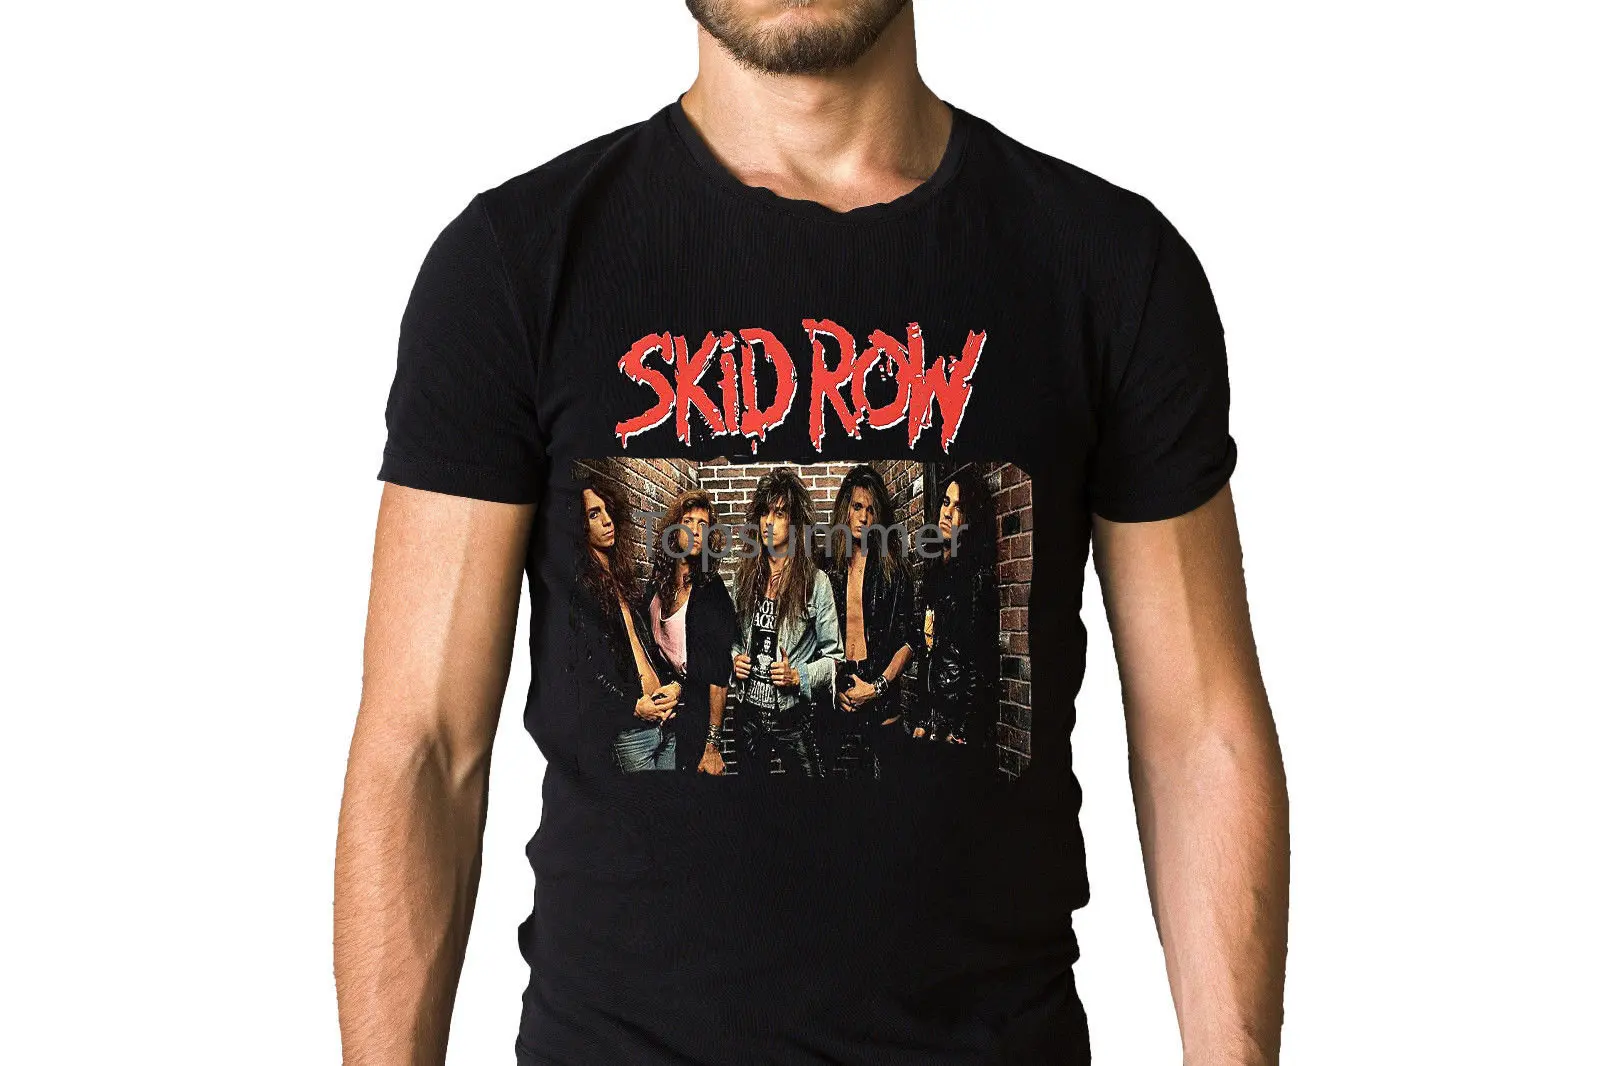 Skid Row Band Group Photo Logo T-Shirt Stranger Things Design T Shirt 2018 New 100 % Cotton Tee Shirt For Men The New